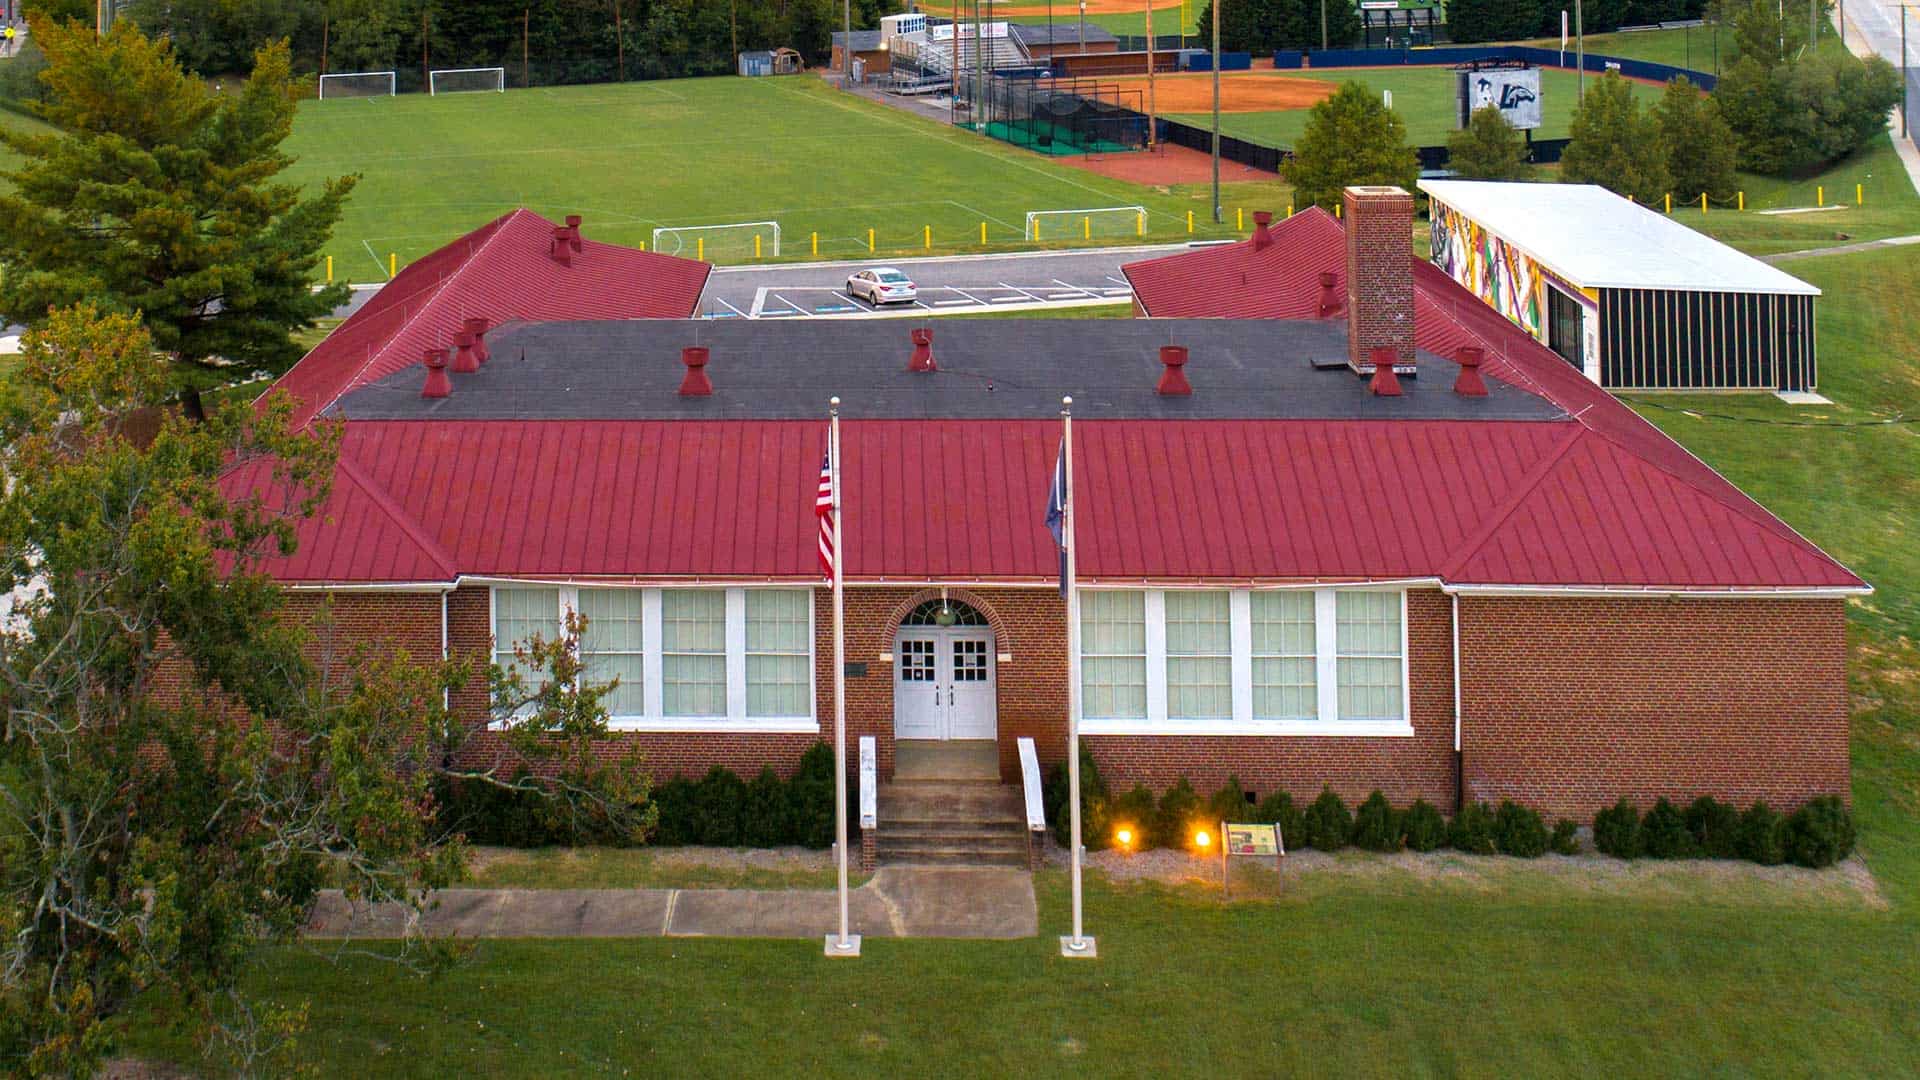 Image of the Robert Russa Moton High School in Farmville, VA